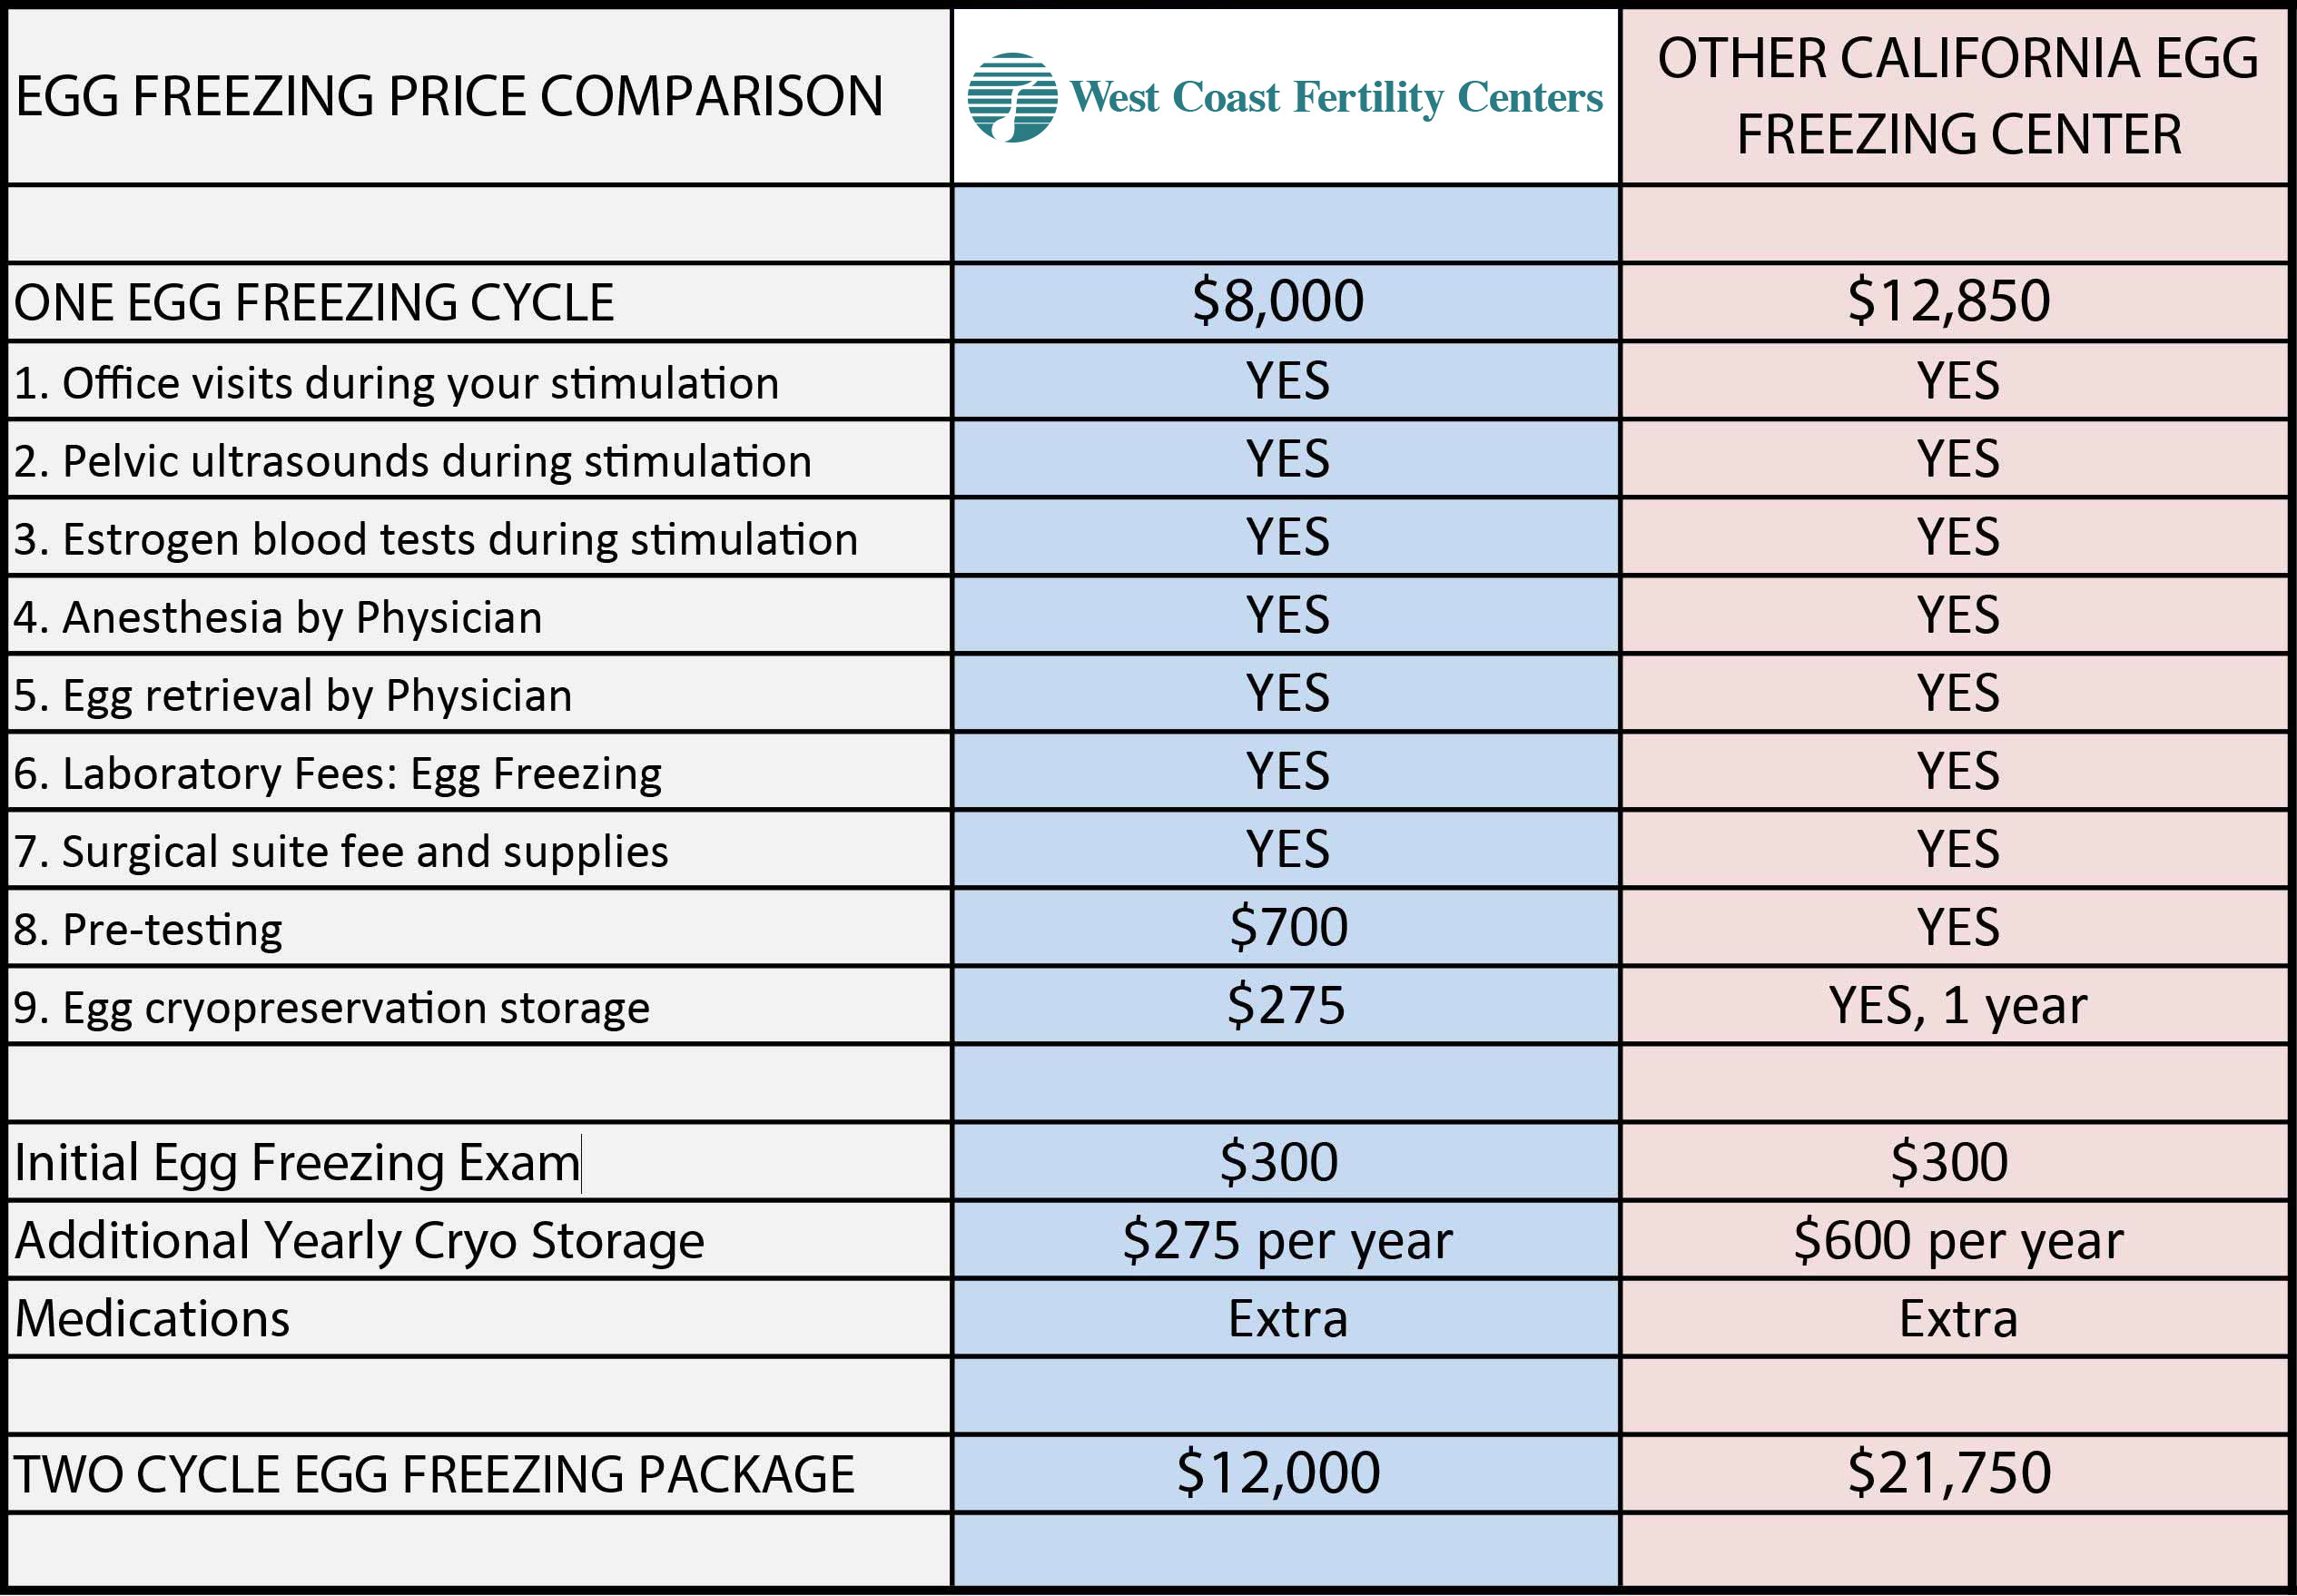 egg-freezing-cost-price-comparison-2018-web-photo